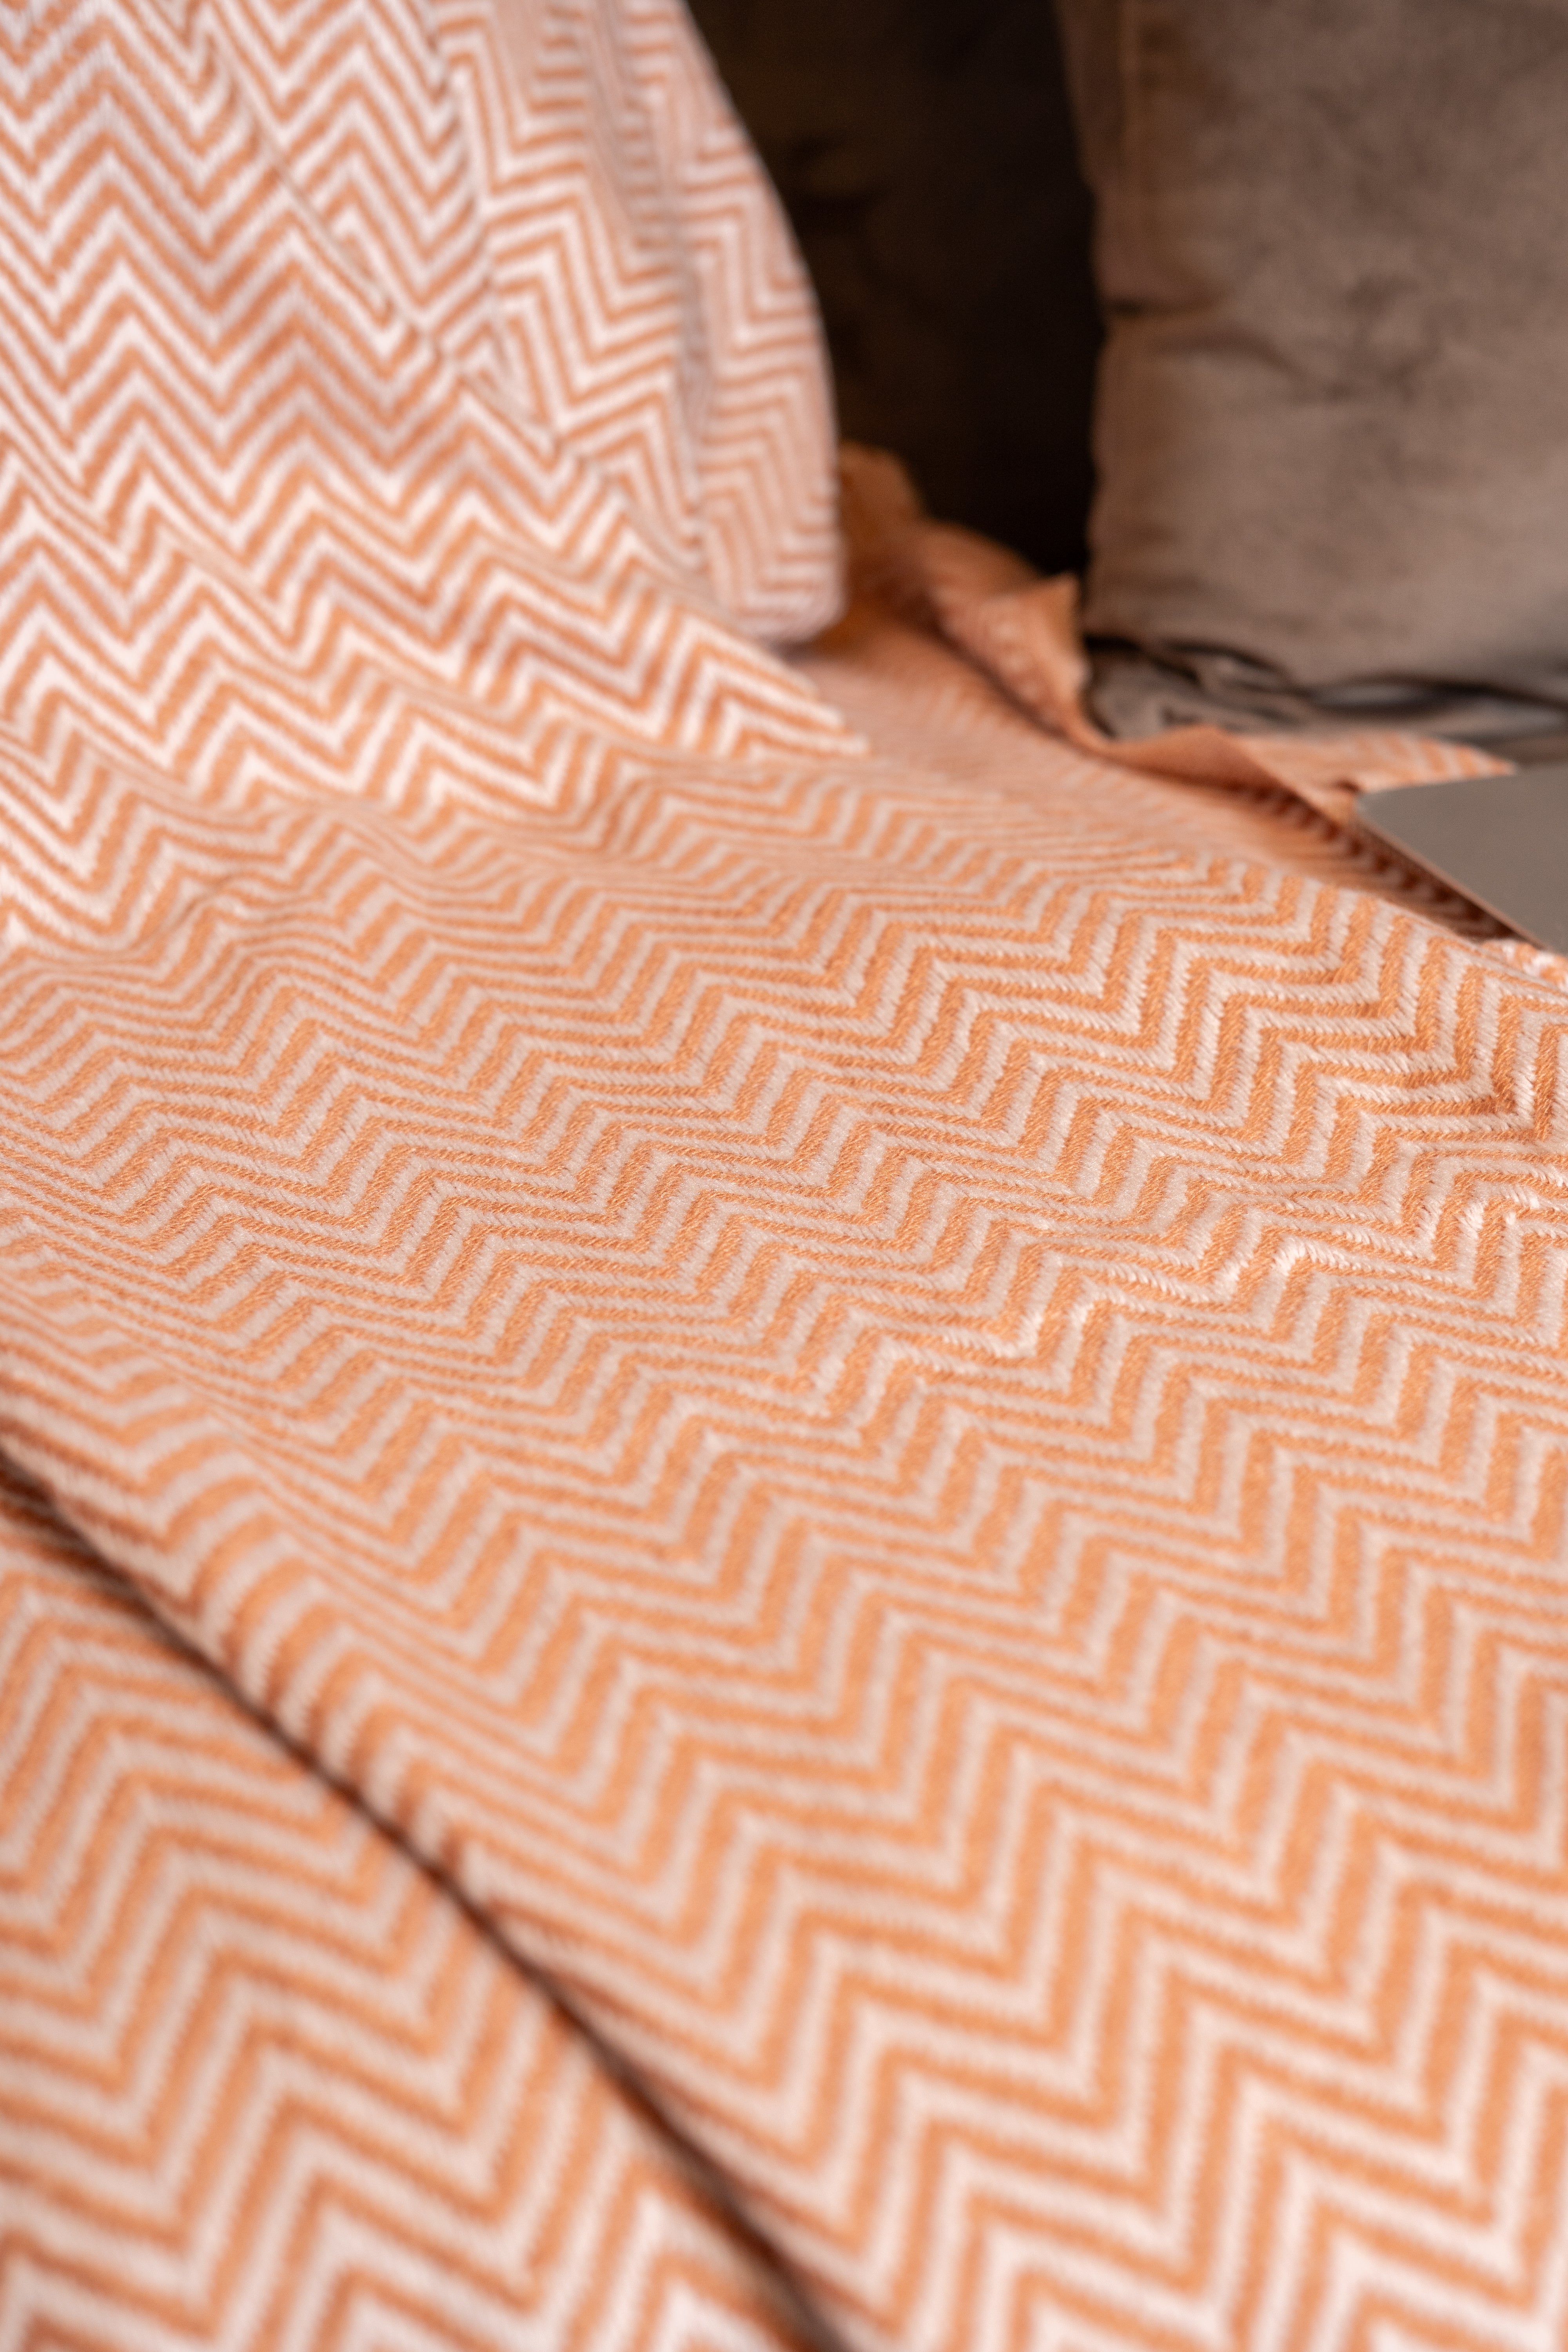 OMVAI Zig Zag Patterned Woven Throw Blanket / Comforter Caramel